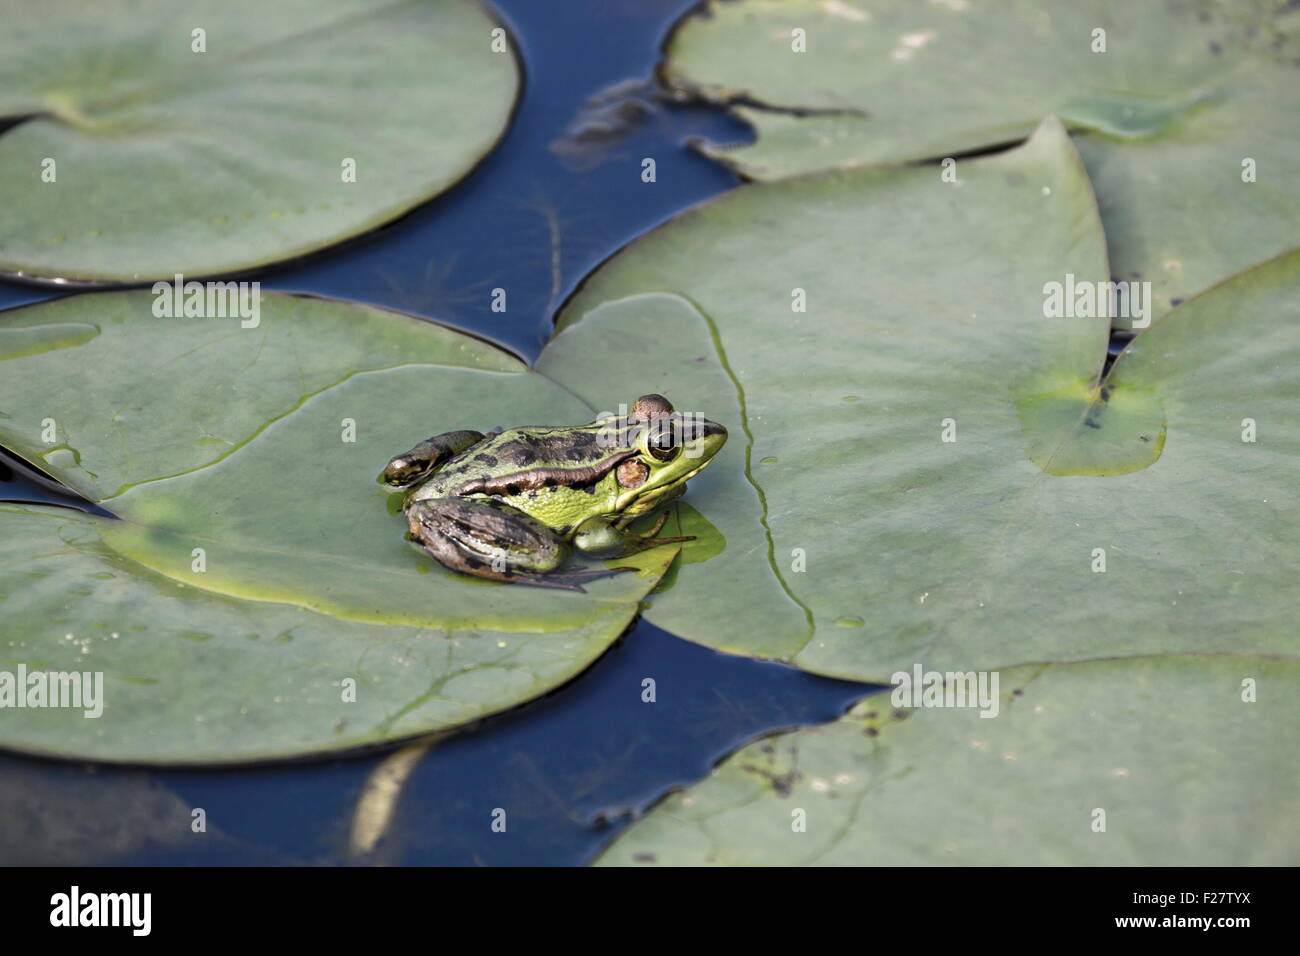 green pond frog in natural habitat Stock Photo